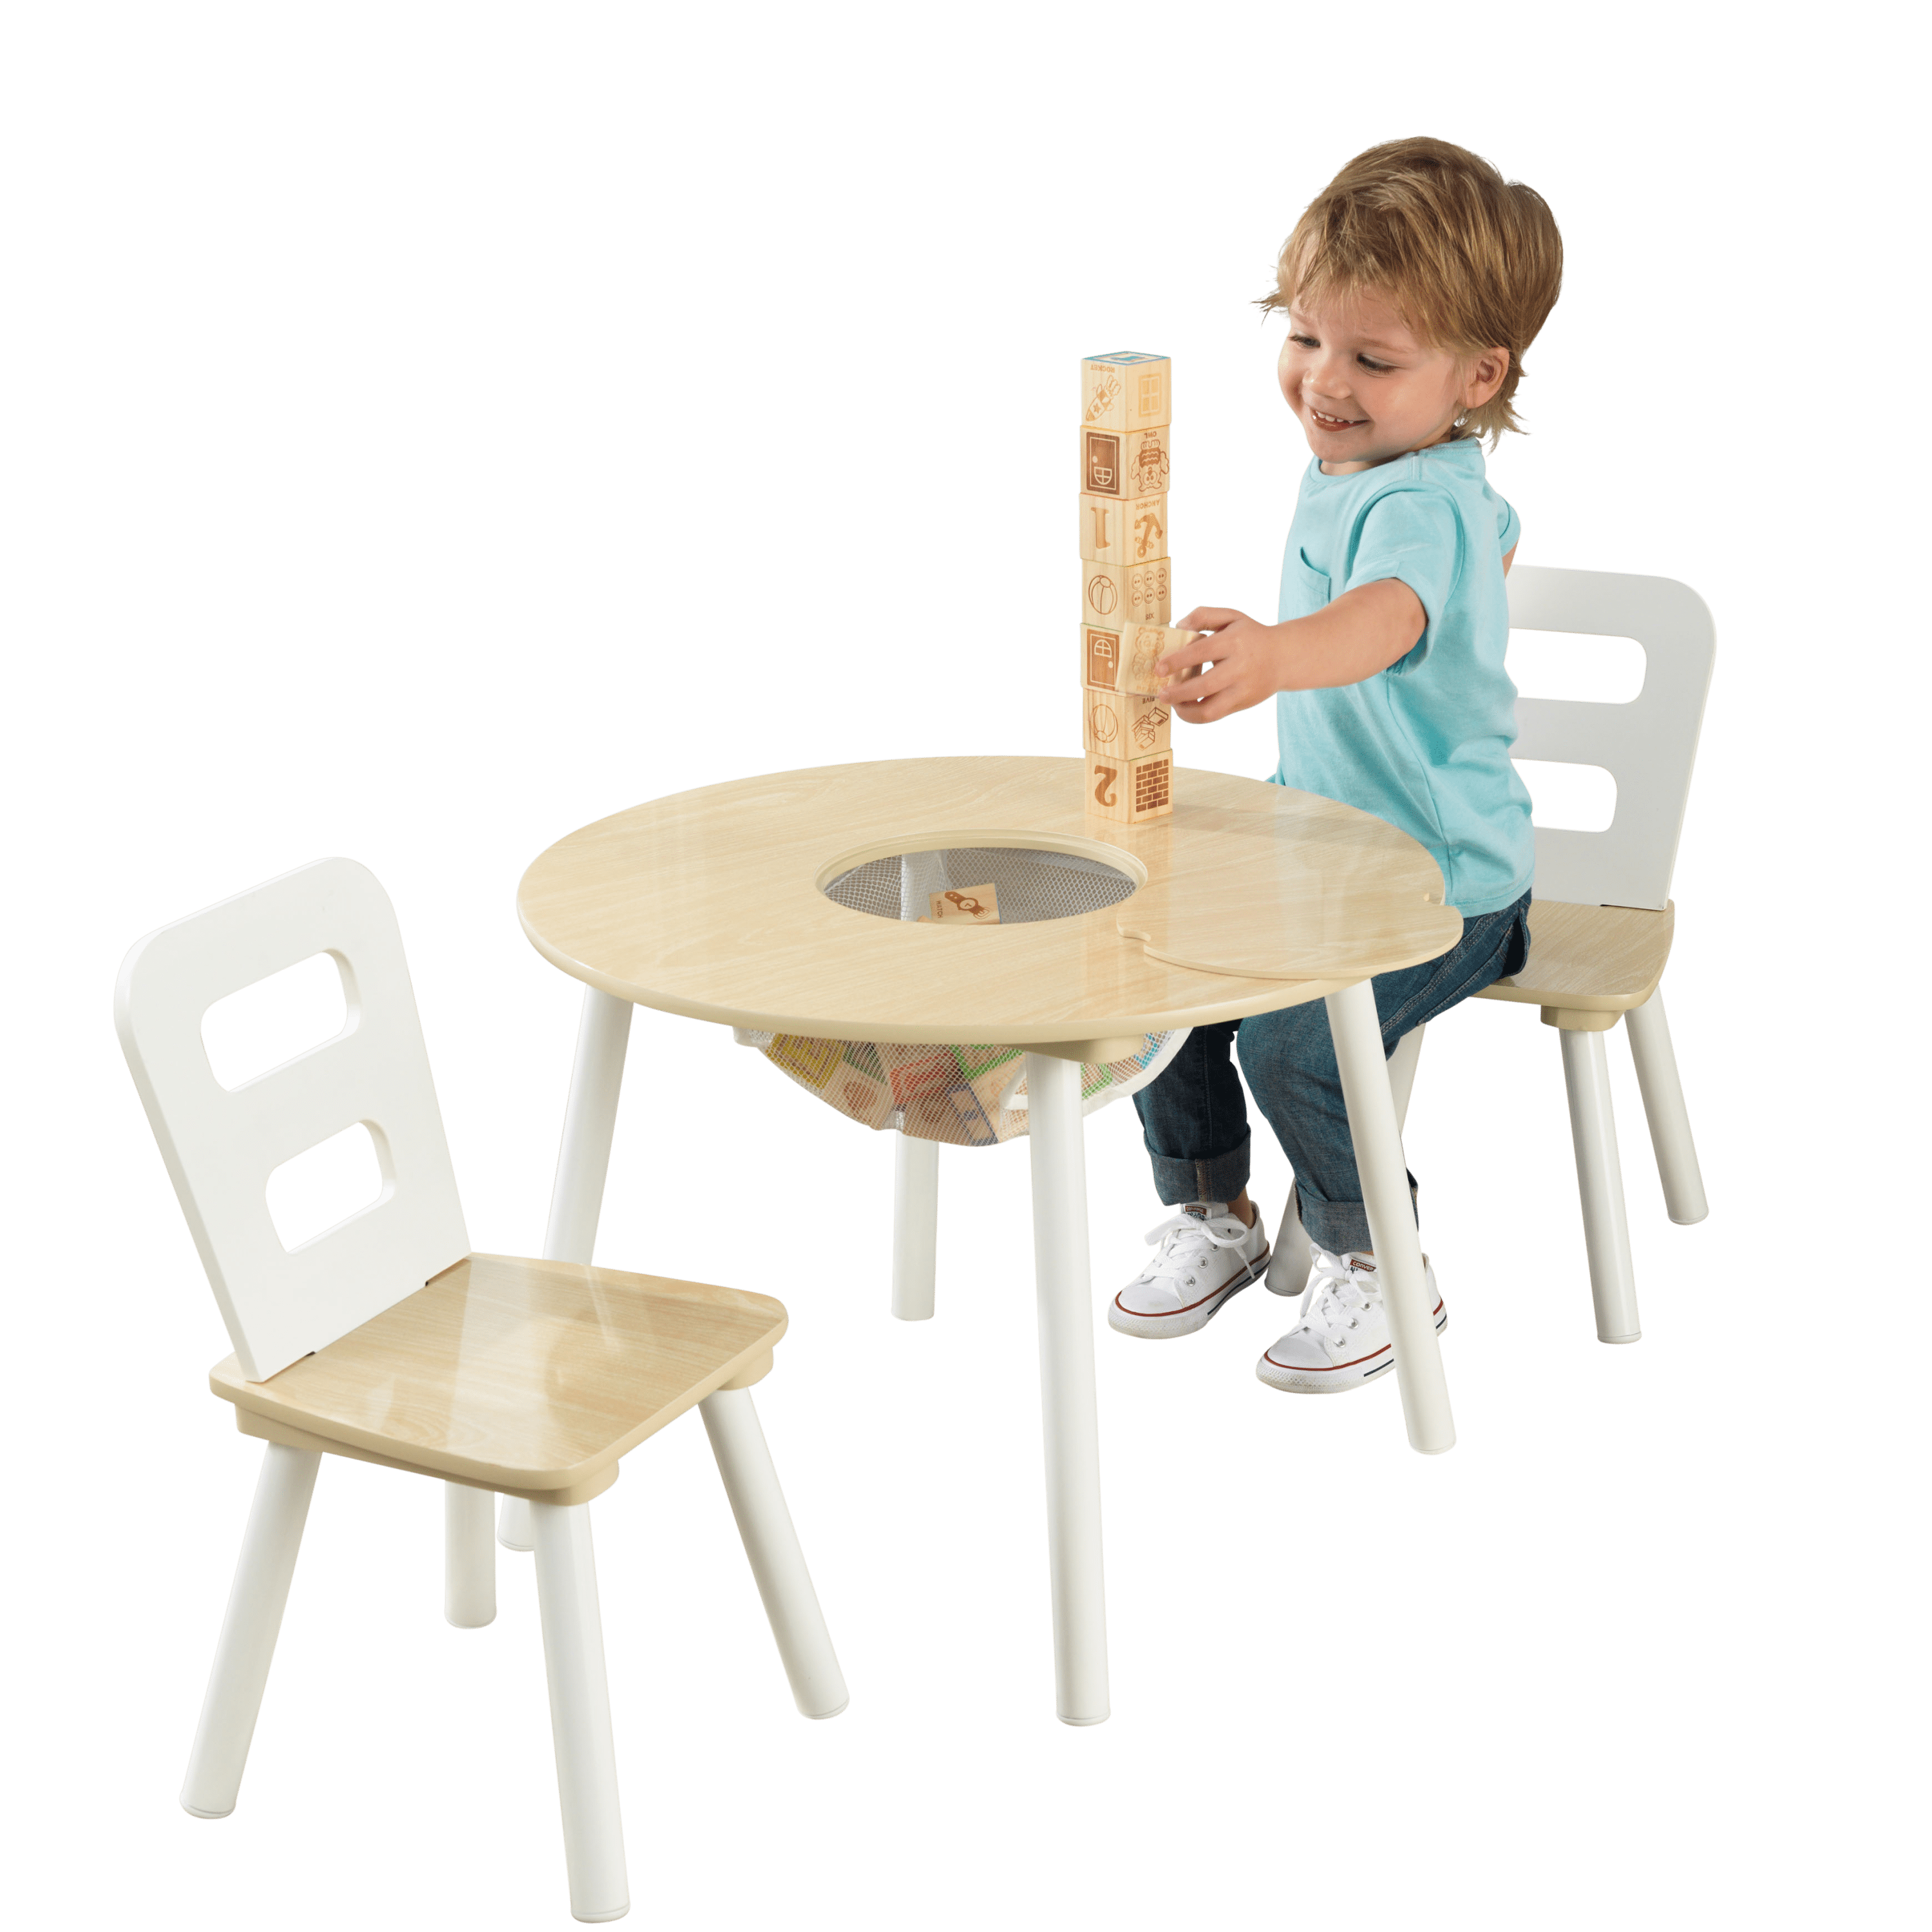 Kidkraft Wooden Kids Round Storage, Kidkraft Round Table And Chairs White